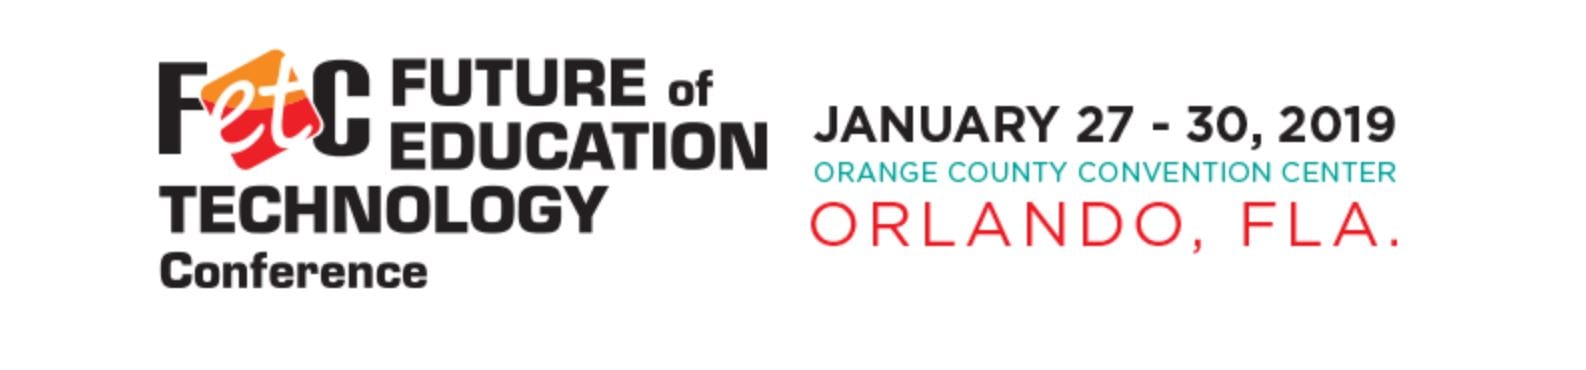 FETC educational conference logo